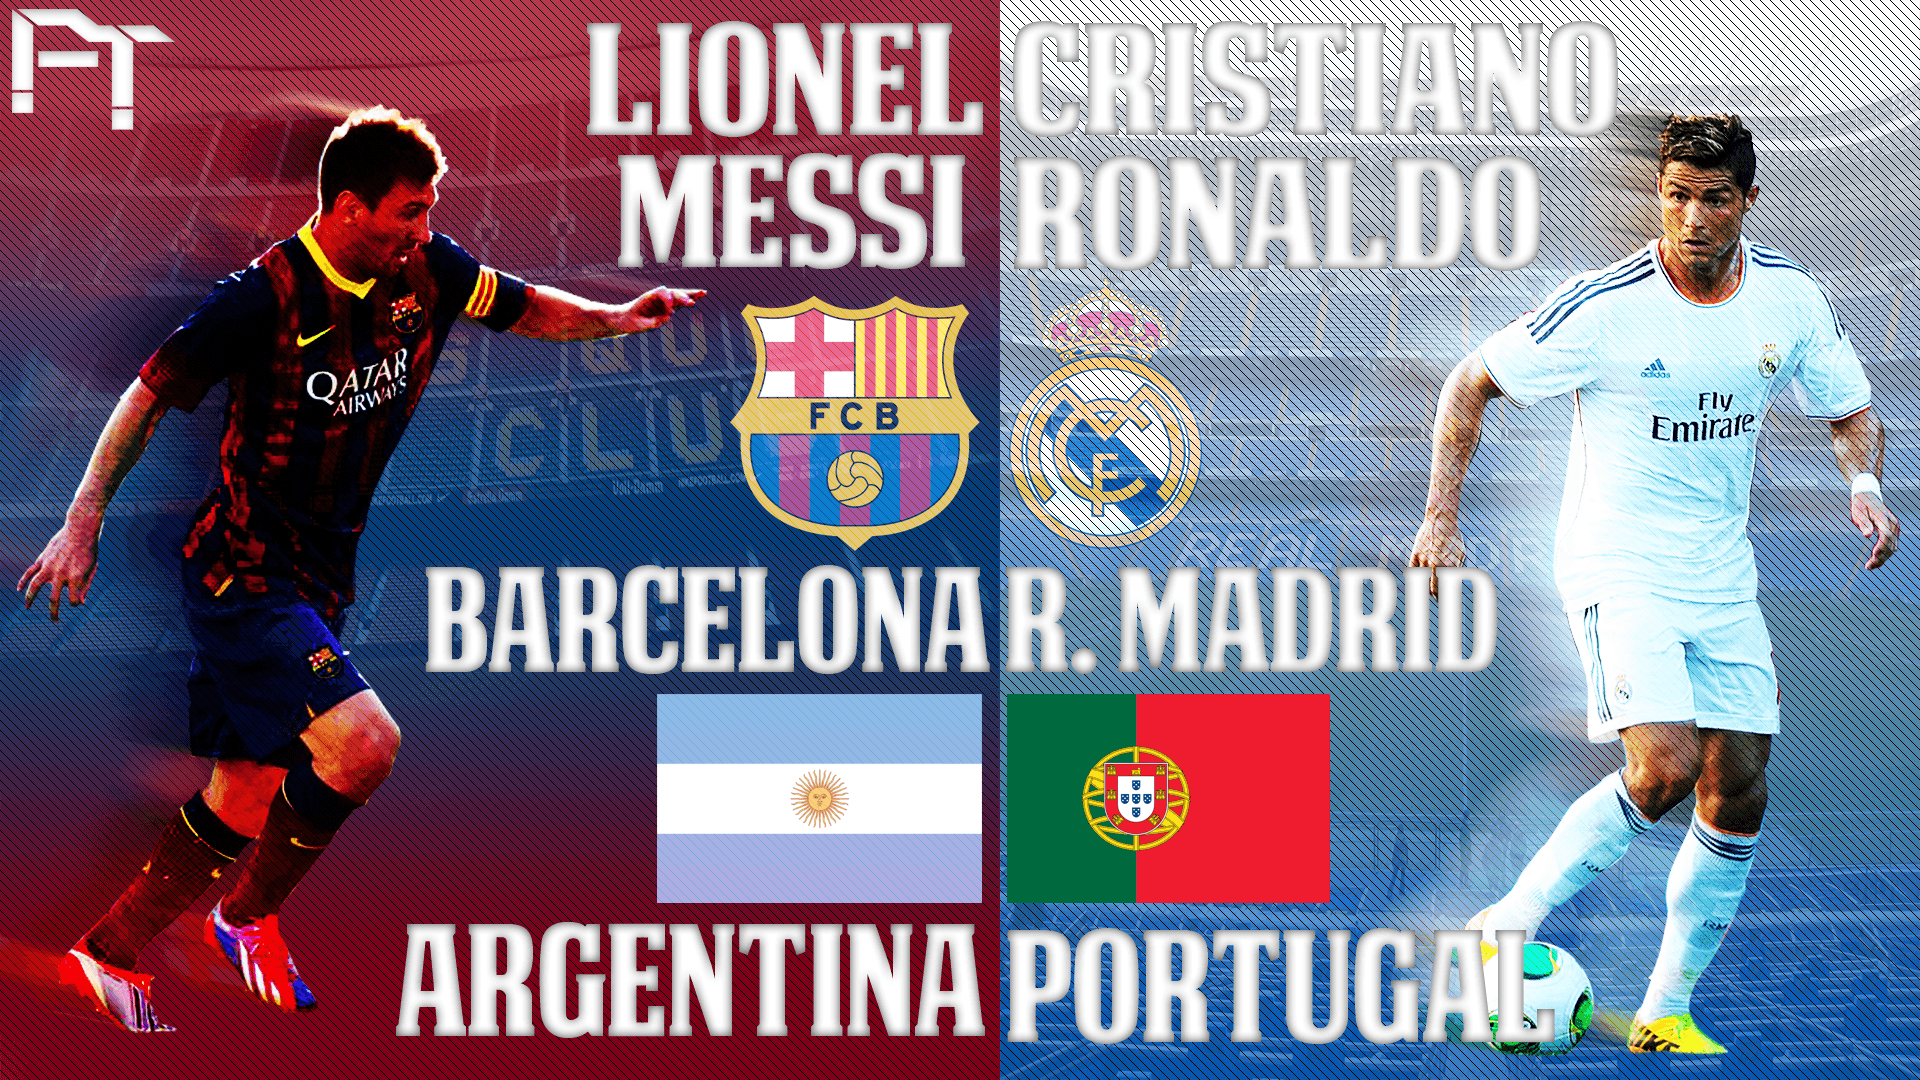 Ronaldo vs Messi HD Image